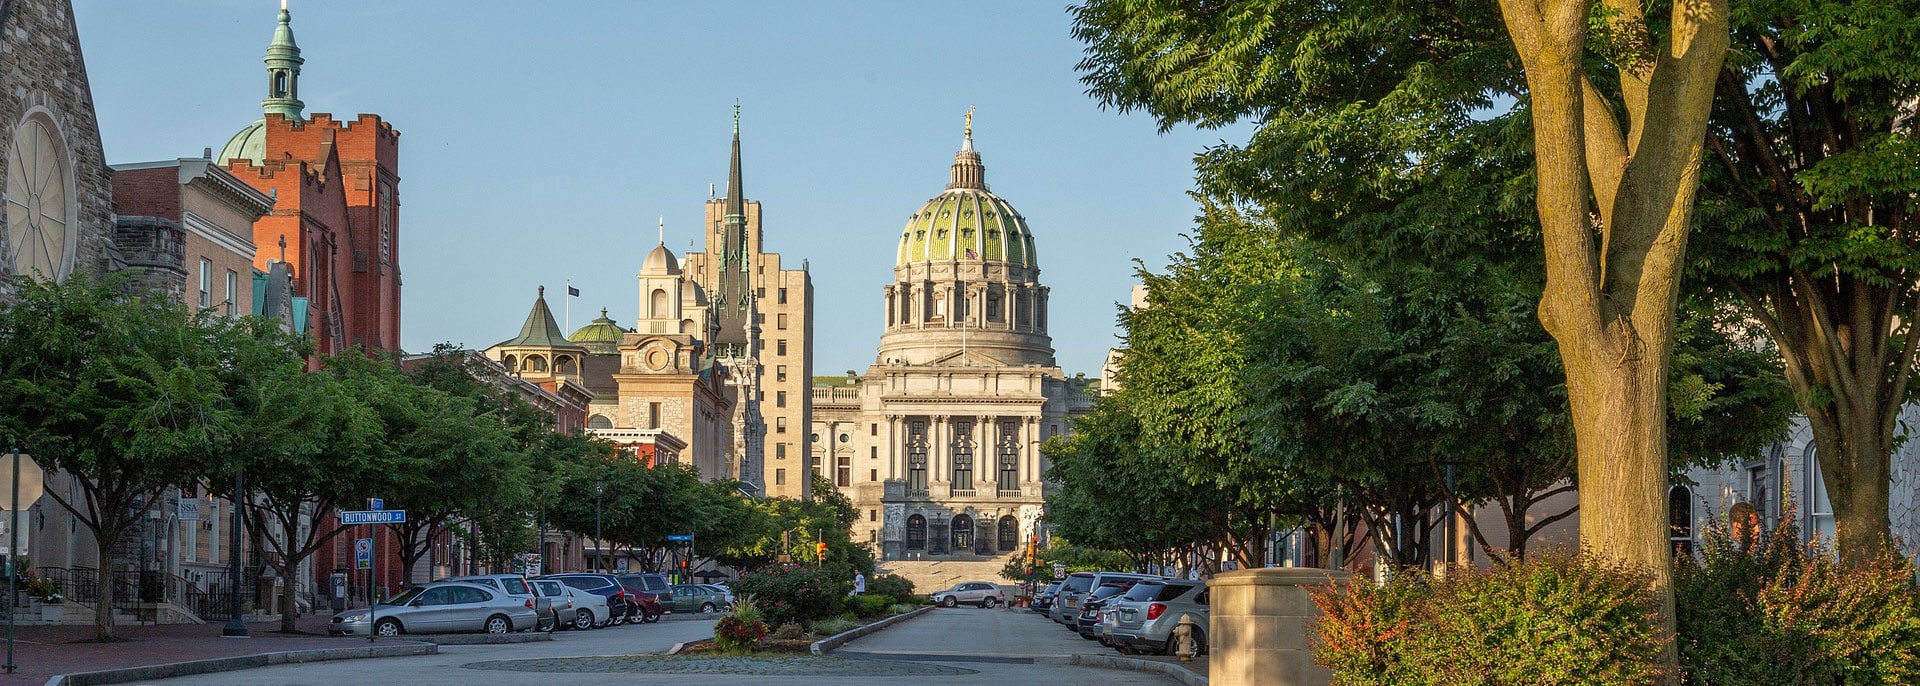 Pennsylvania Capital Building